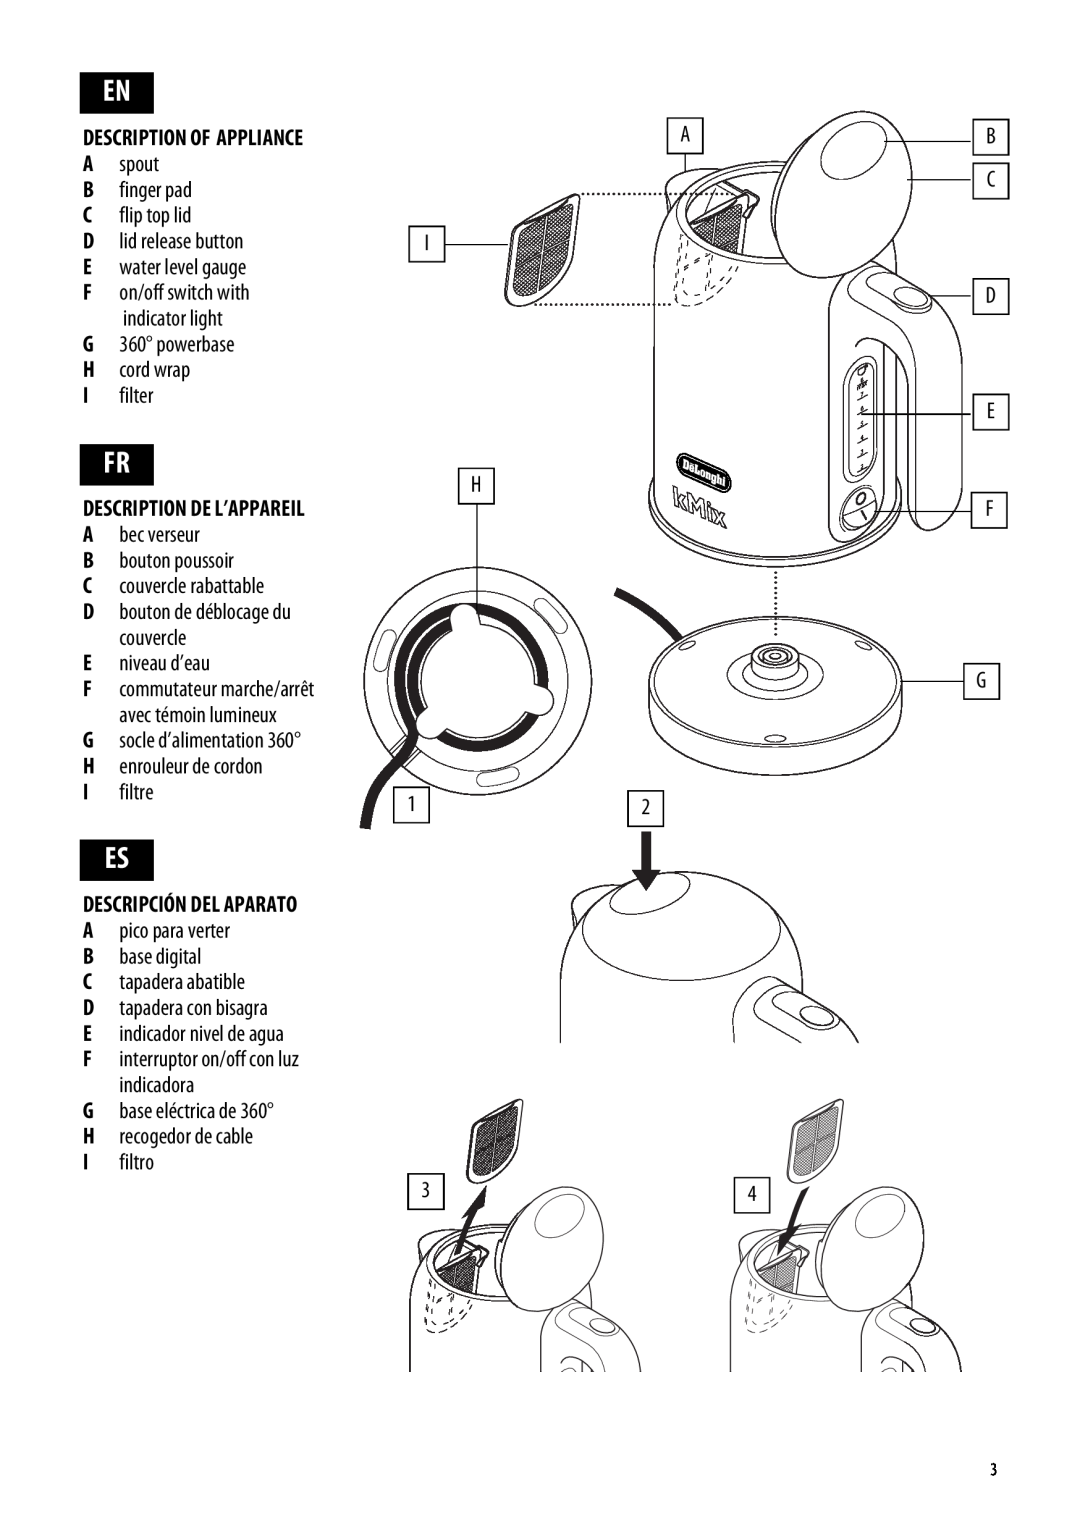 DeLonghi DSJ04 manual Description Of Appliance, Description De L’Appareil, Descripción Del Aparato 